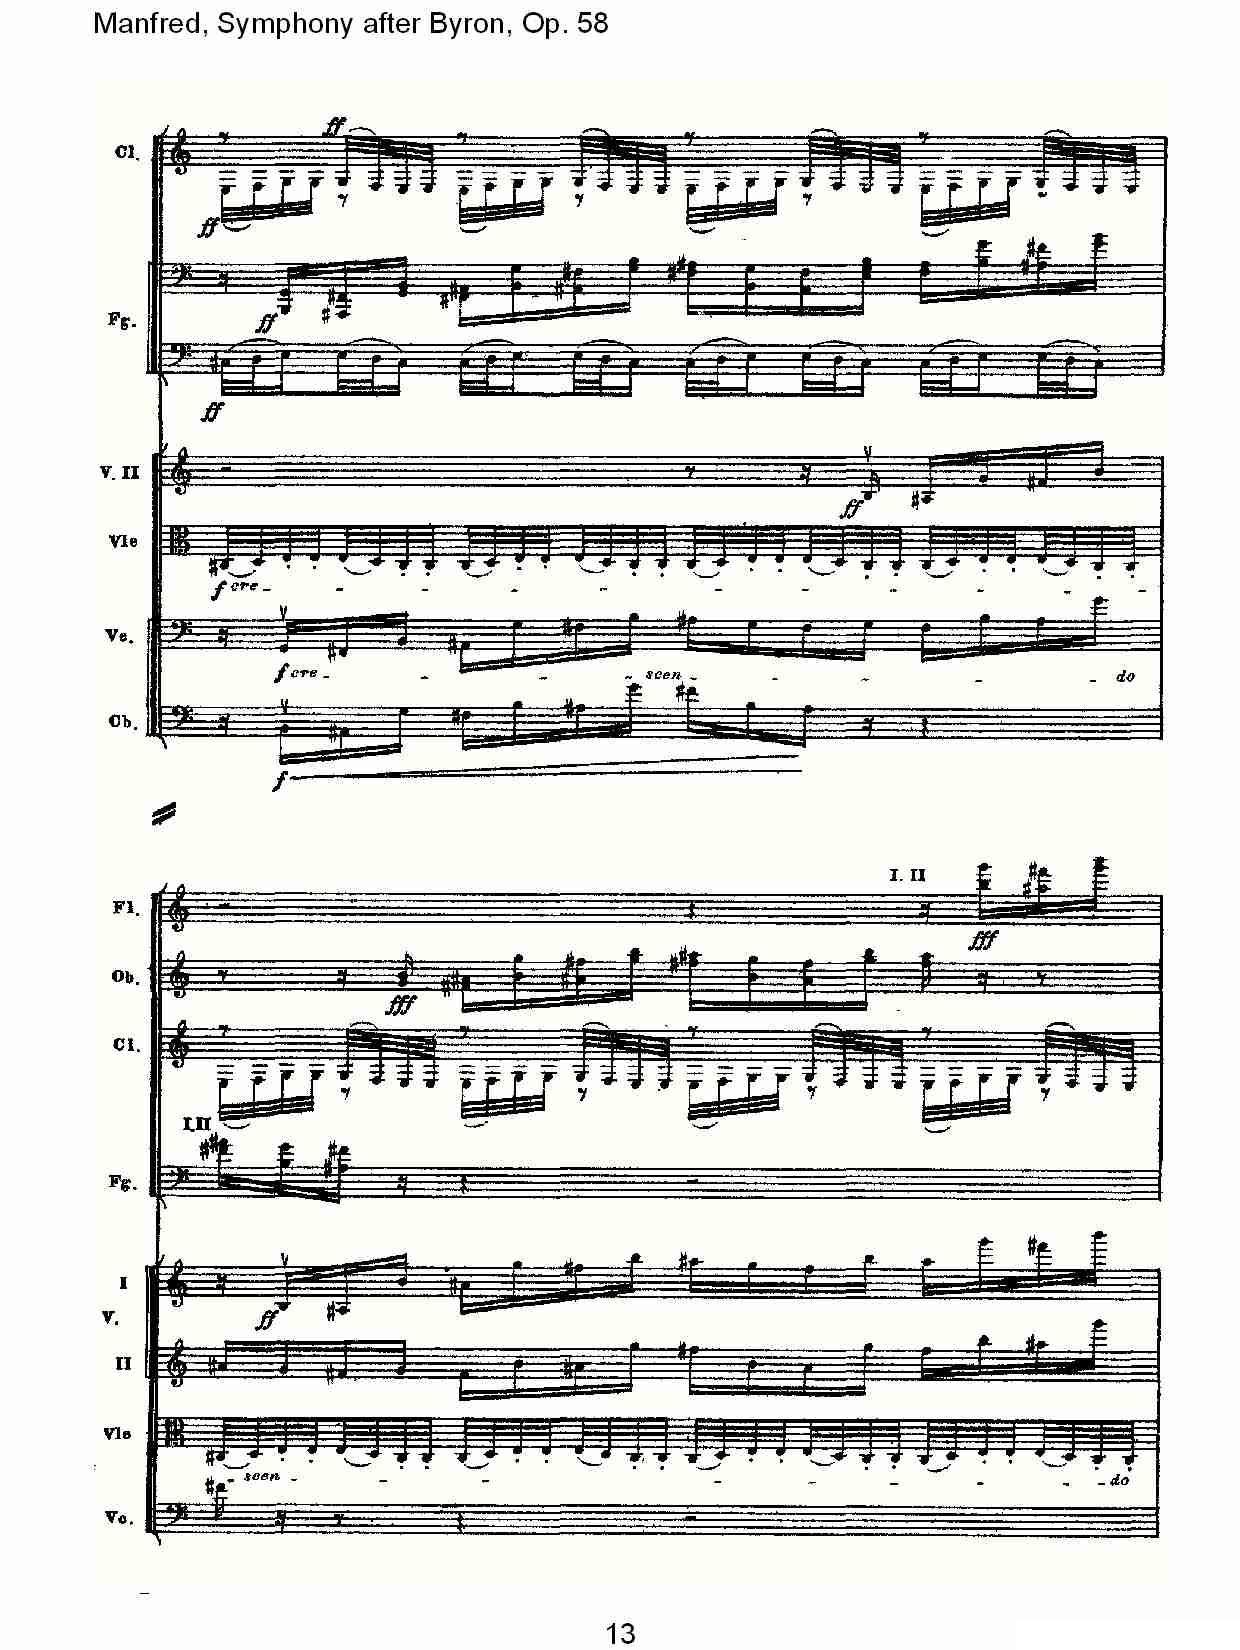 Manfred, Symphony after Byron, Op.58第一乐章（一）其它曲谱（图13）